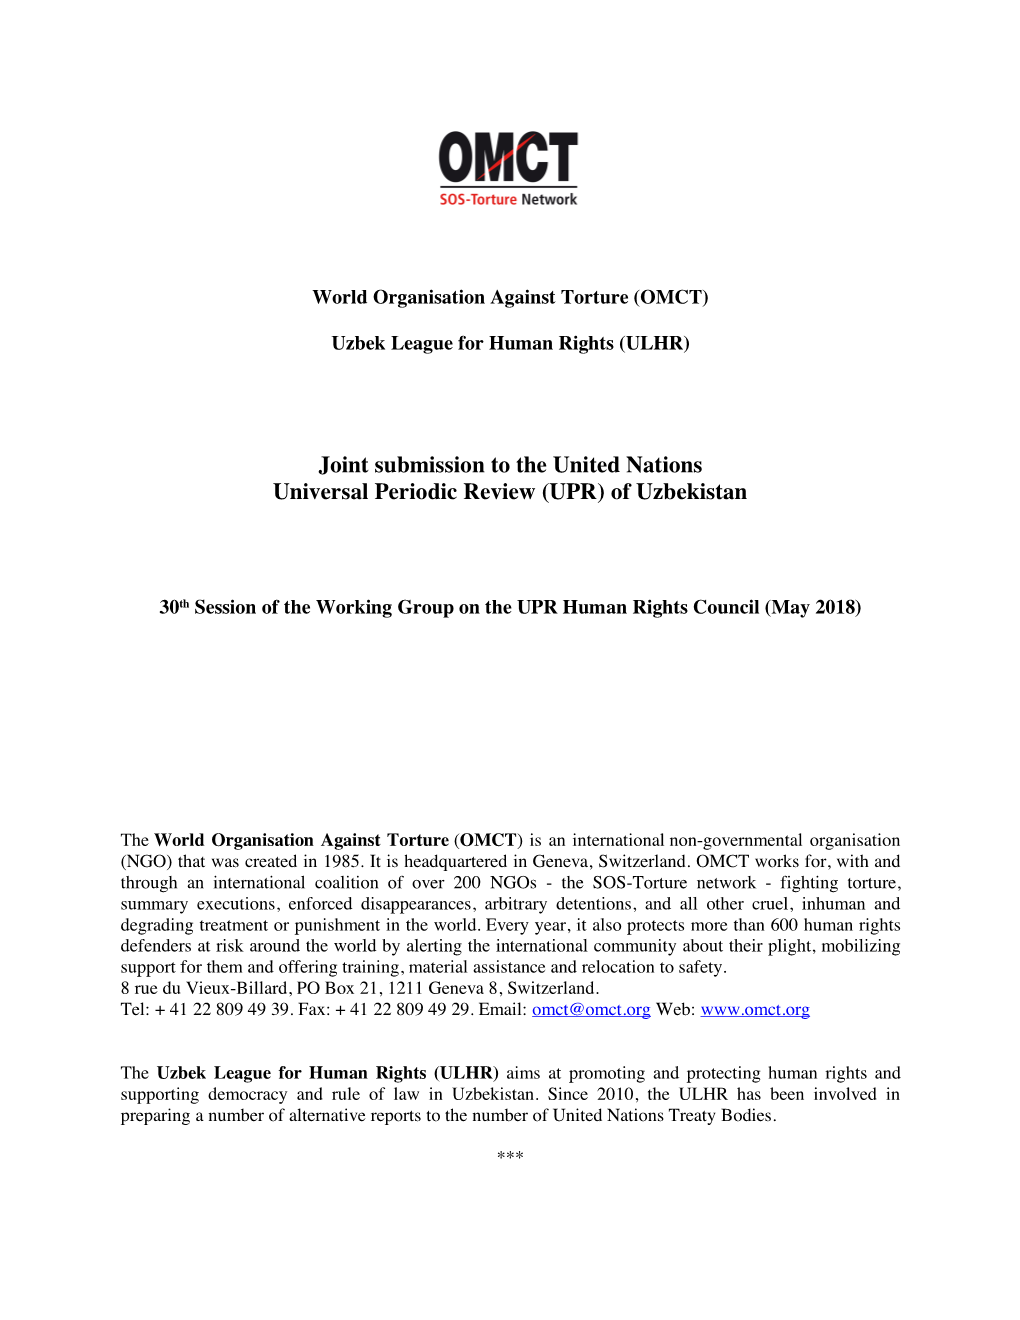 OMCT ULHR Submission to UPR of Uzbekistan